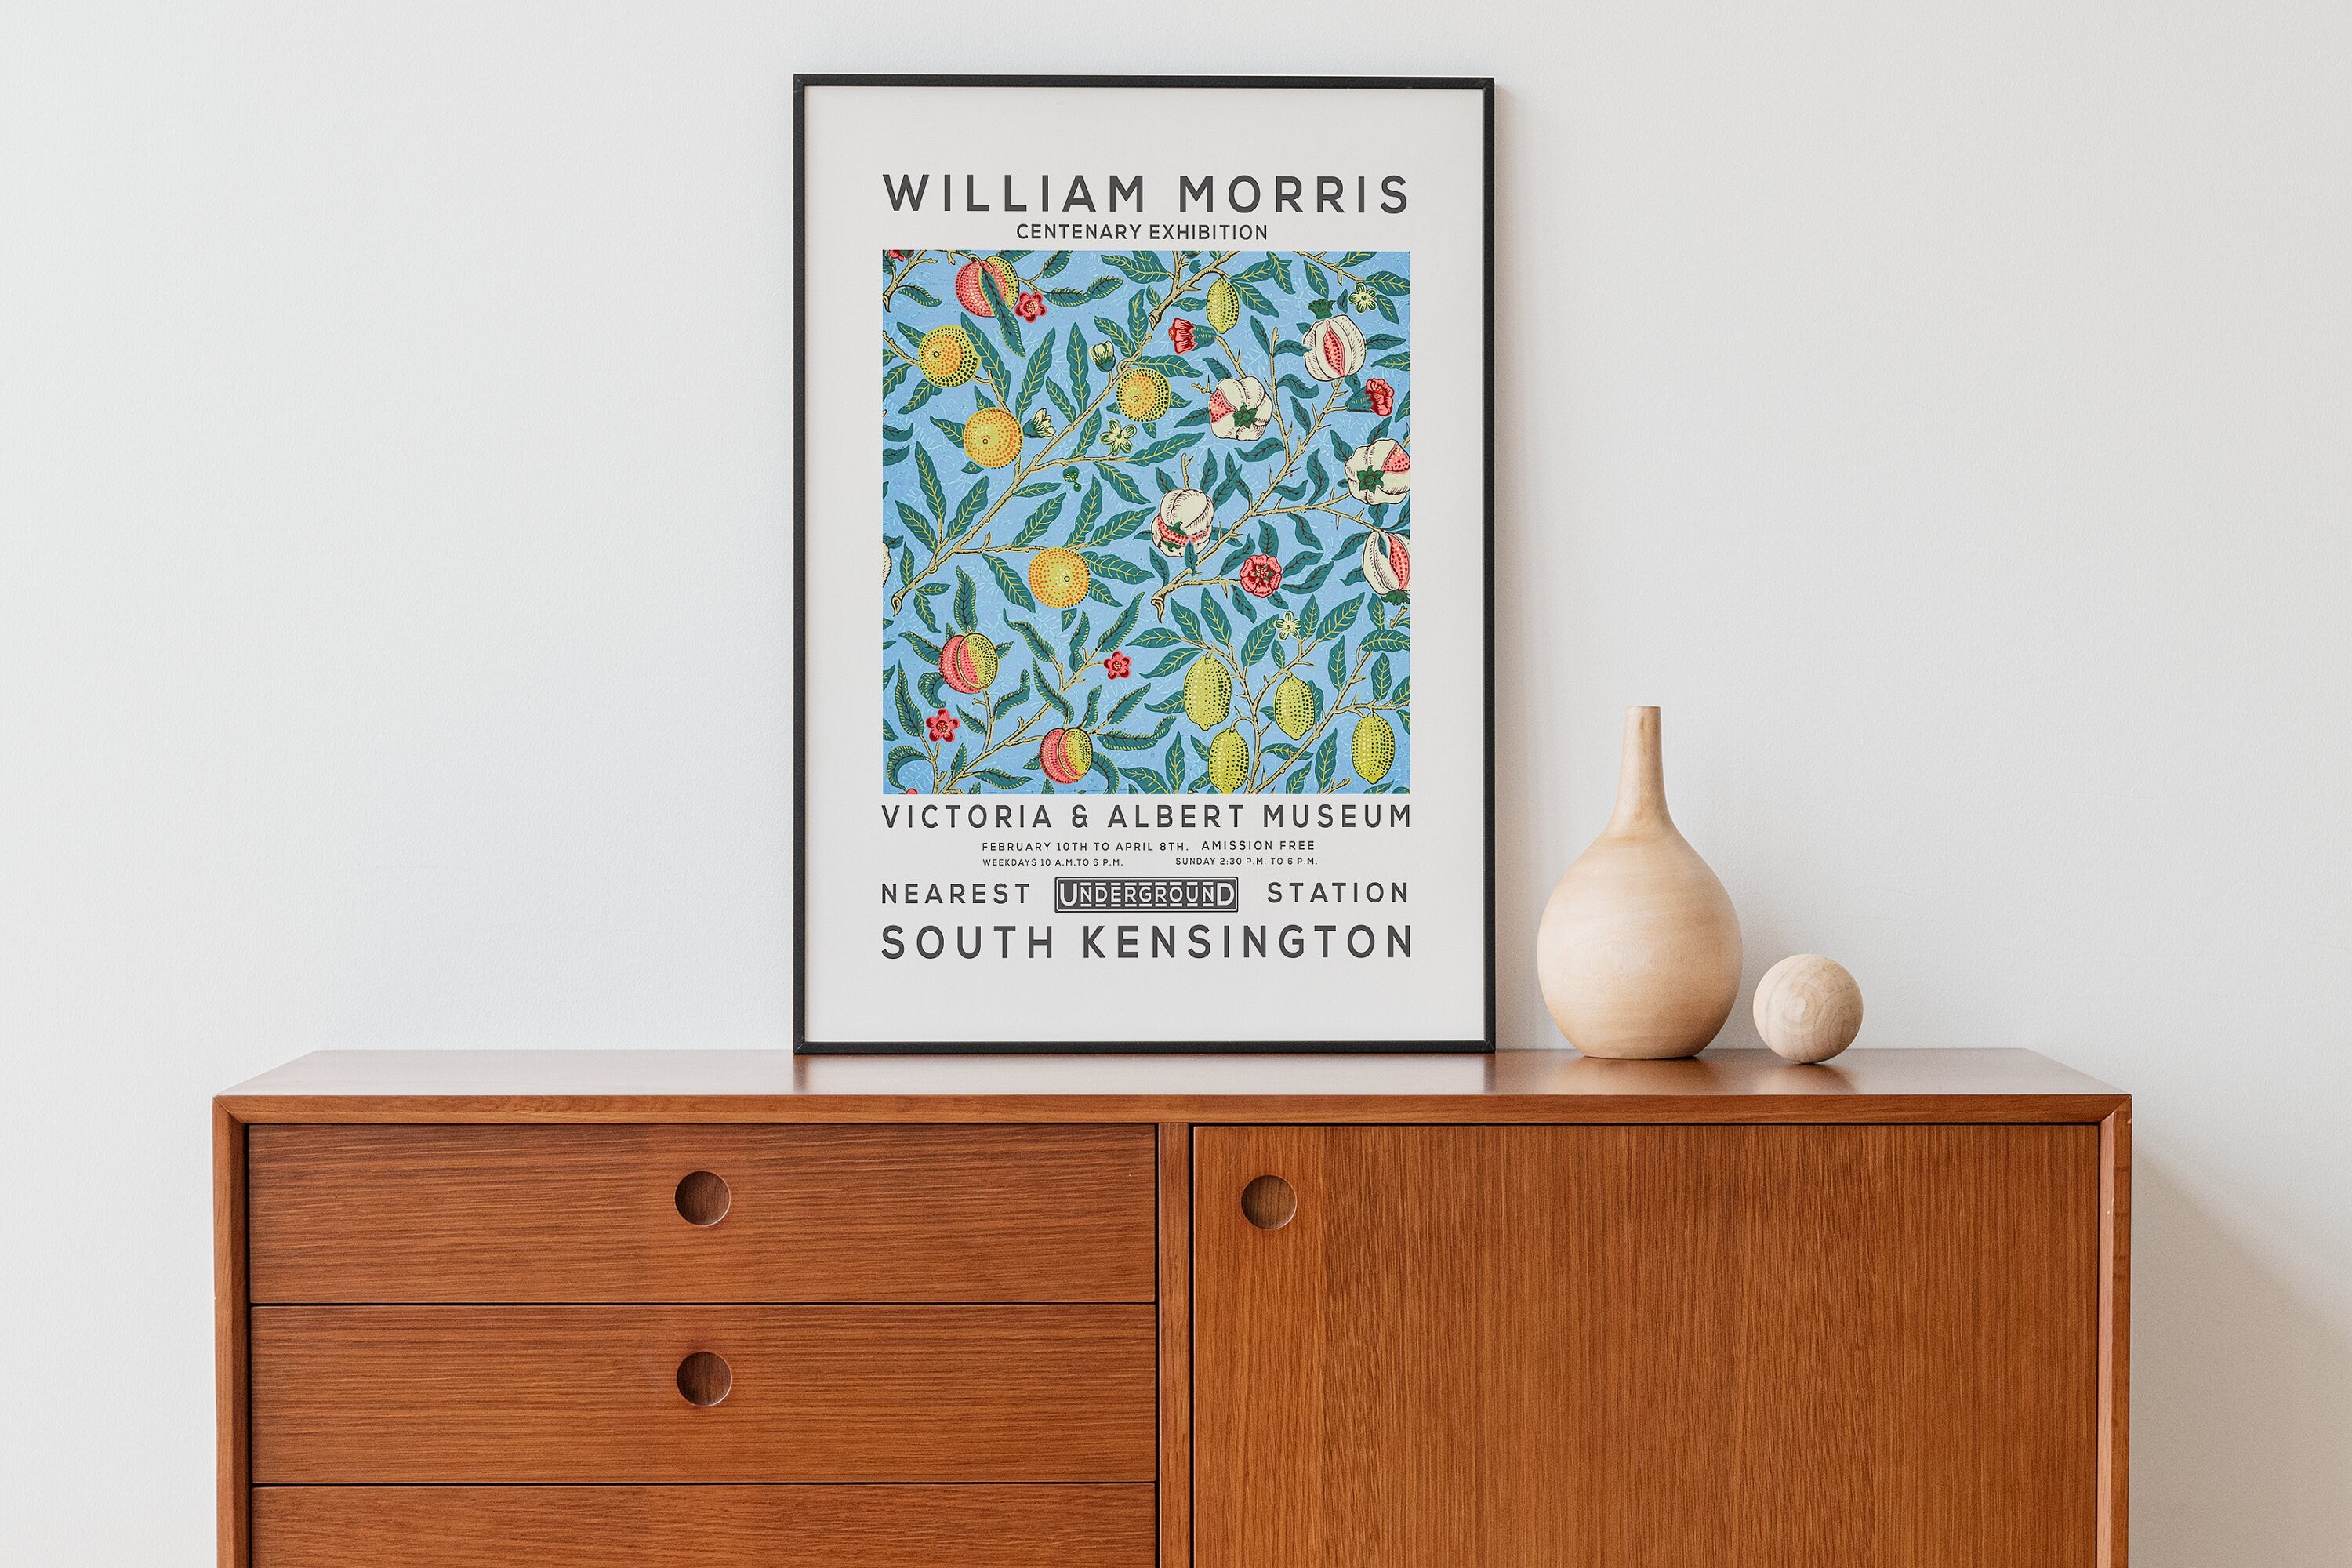 William Morris Print, Vintage Wall Decor, Exhibition Poster, Floral Wall Art, Flower Print, Home Decor, Blue Fruit